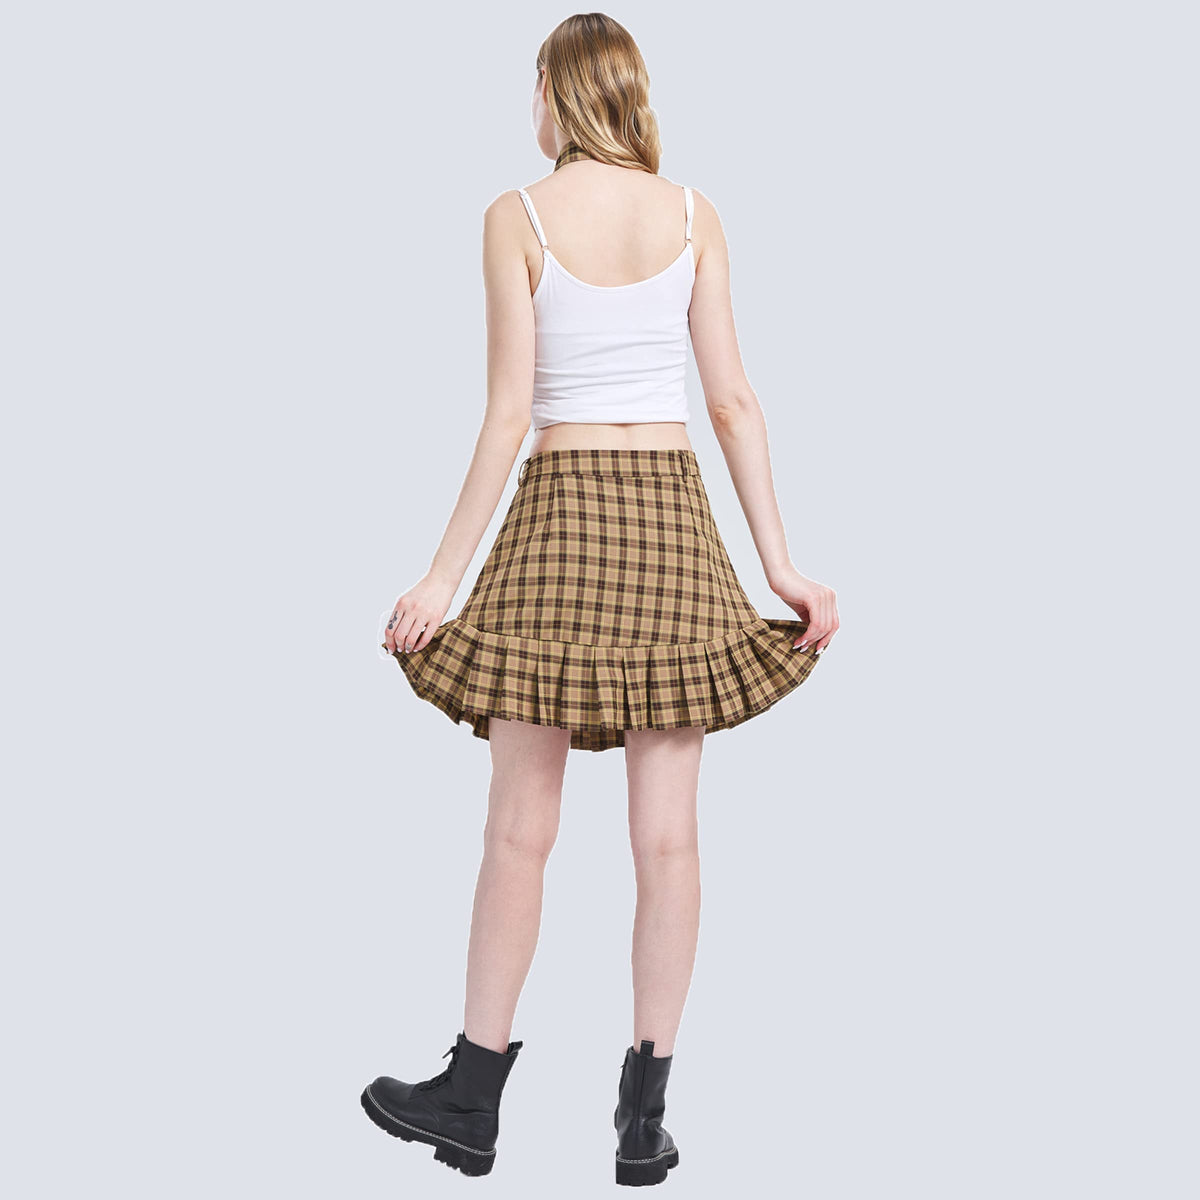 Kisidoo Summer Women&#39;s Skirt Casual Pleated Skirts Yellow Plaid High Waisted Skirts Girl&#39;s Basic Skirt with Elasticity Short